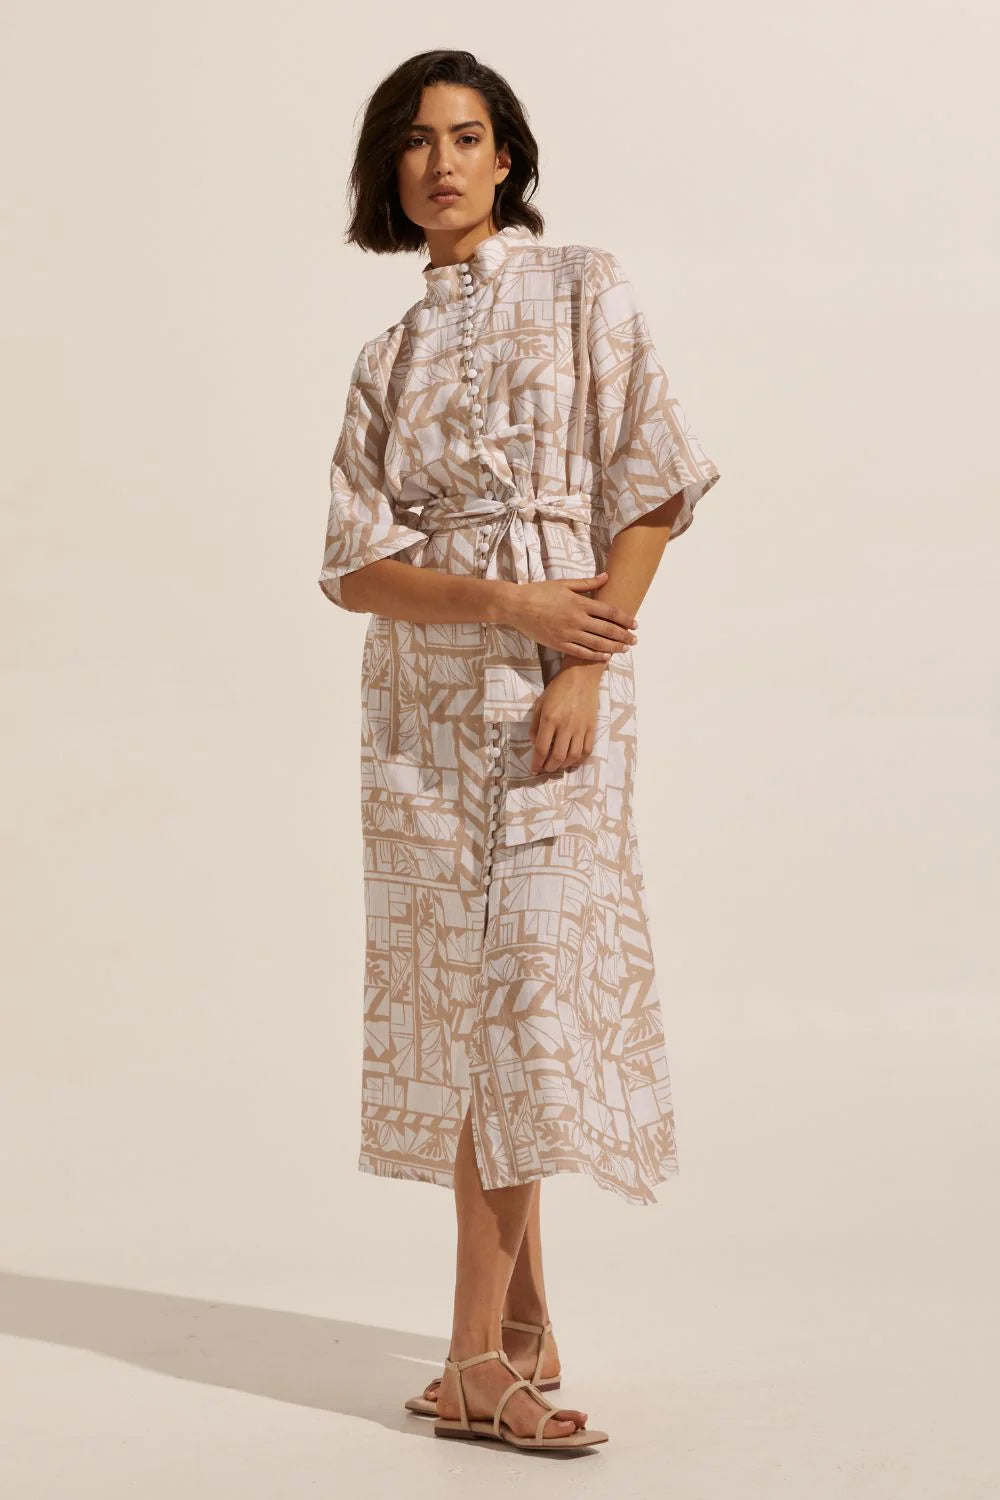 Zoe Kratzmann Insight Dress - Matisse Stone